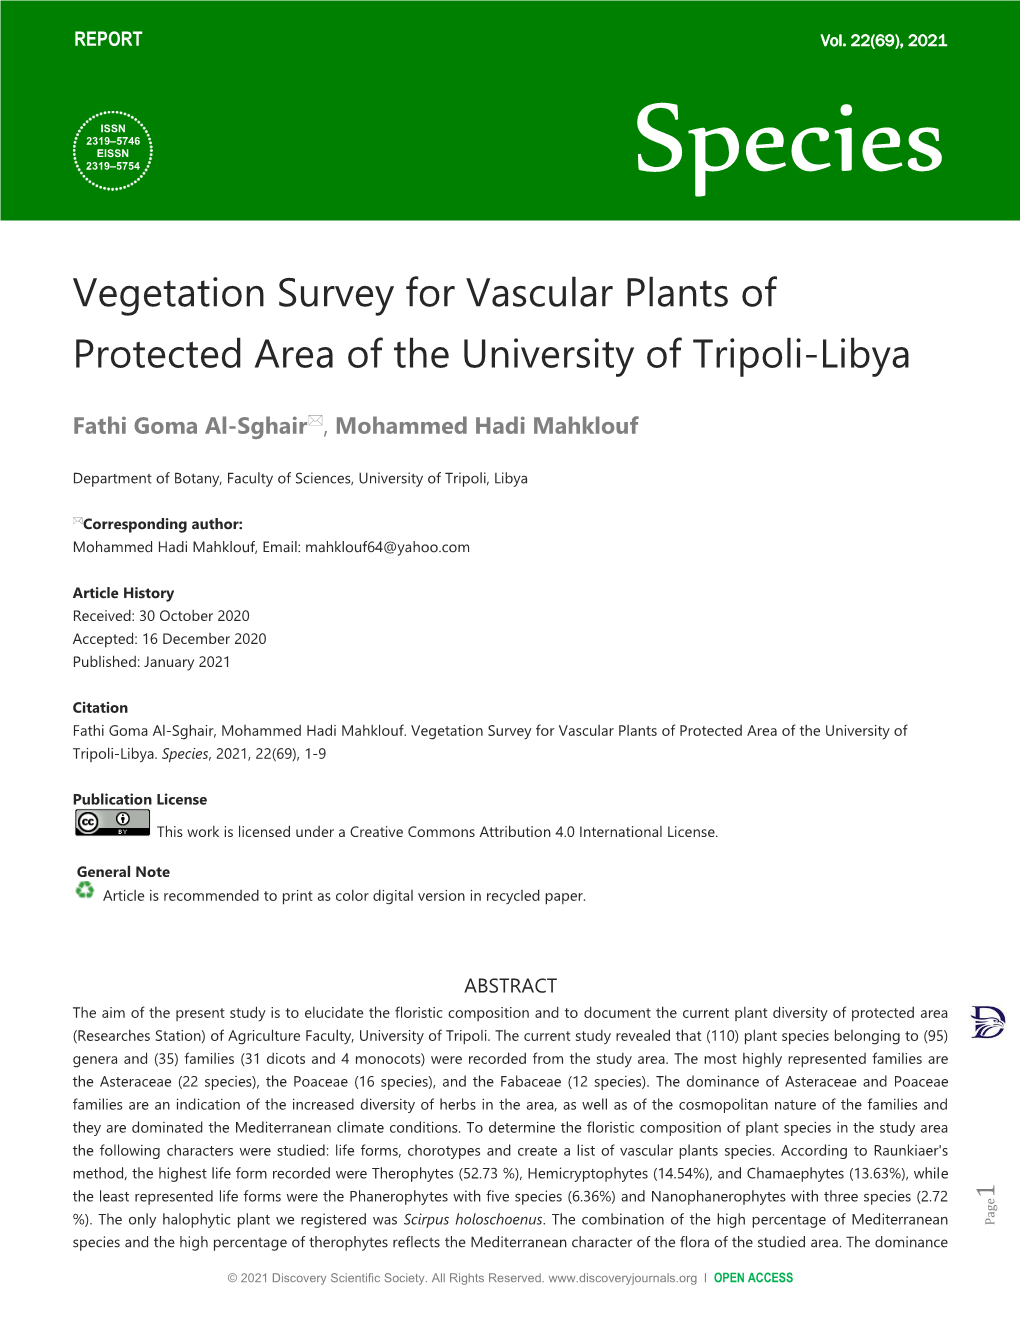 Vegetation Survey for Vascular Plants of Protected Area of the University of Tripoli-Libya